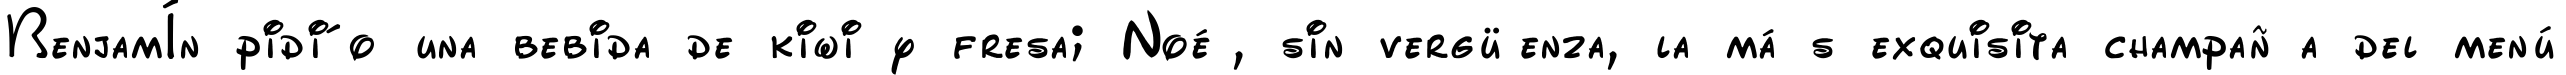 Пример написания шрифтом Walt Disney Script текста на испанском